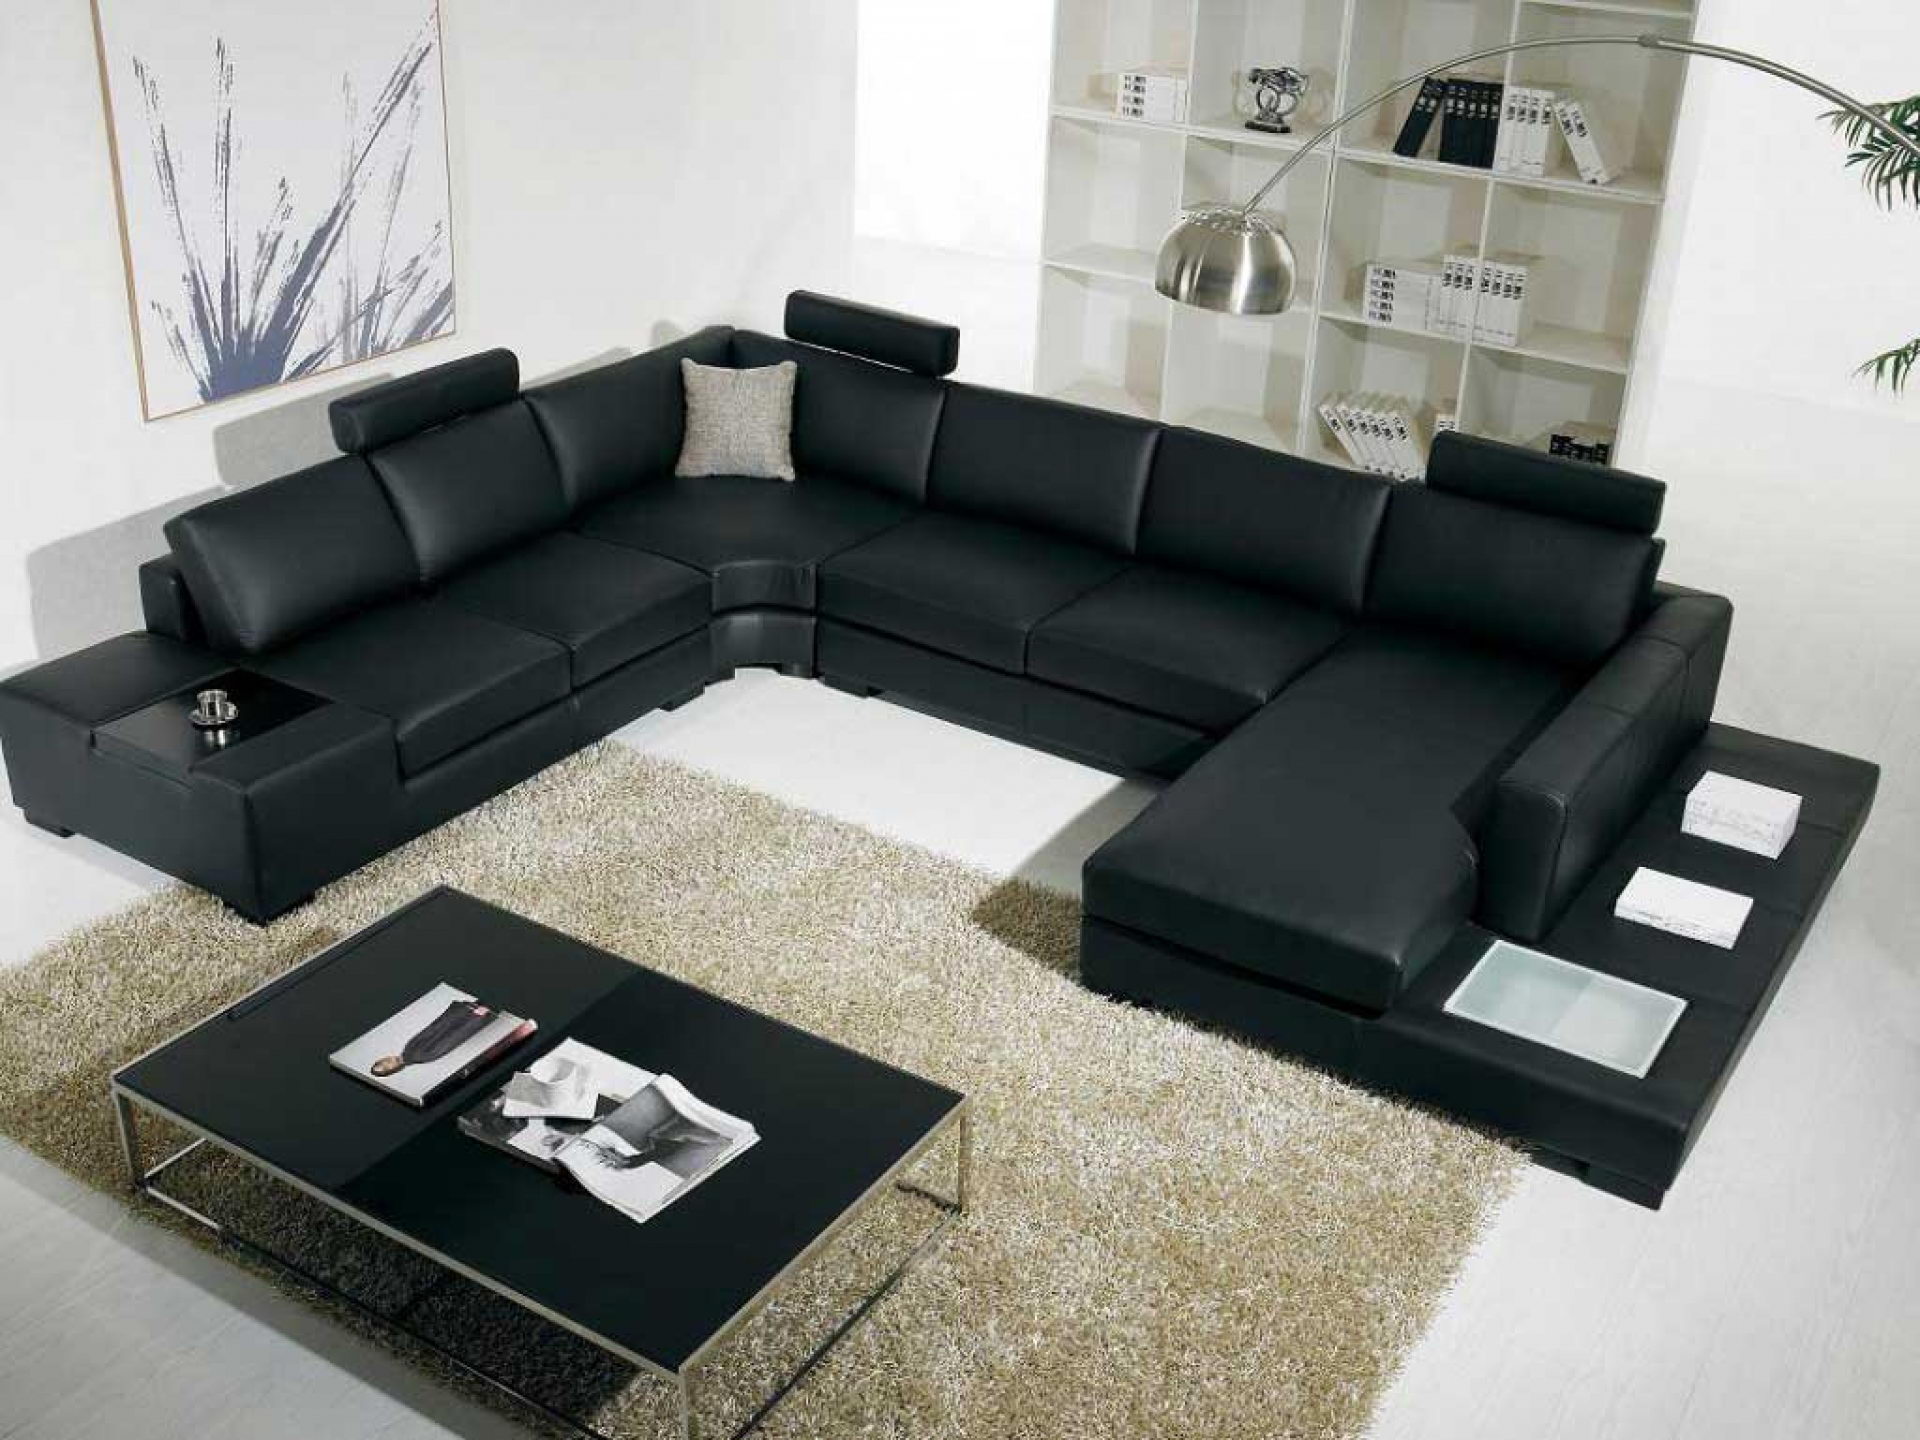 Top 10 Living Room Furniture Design Trends: A Modern Sofa - Interior